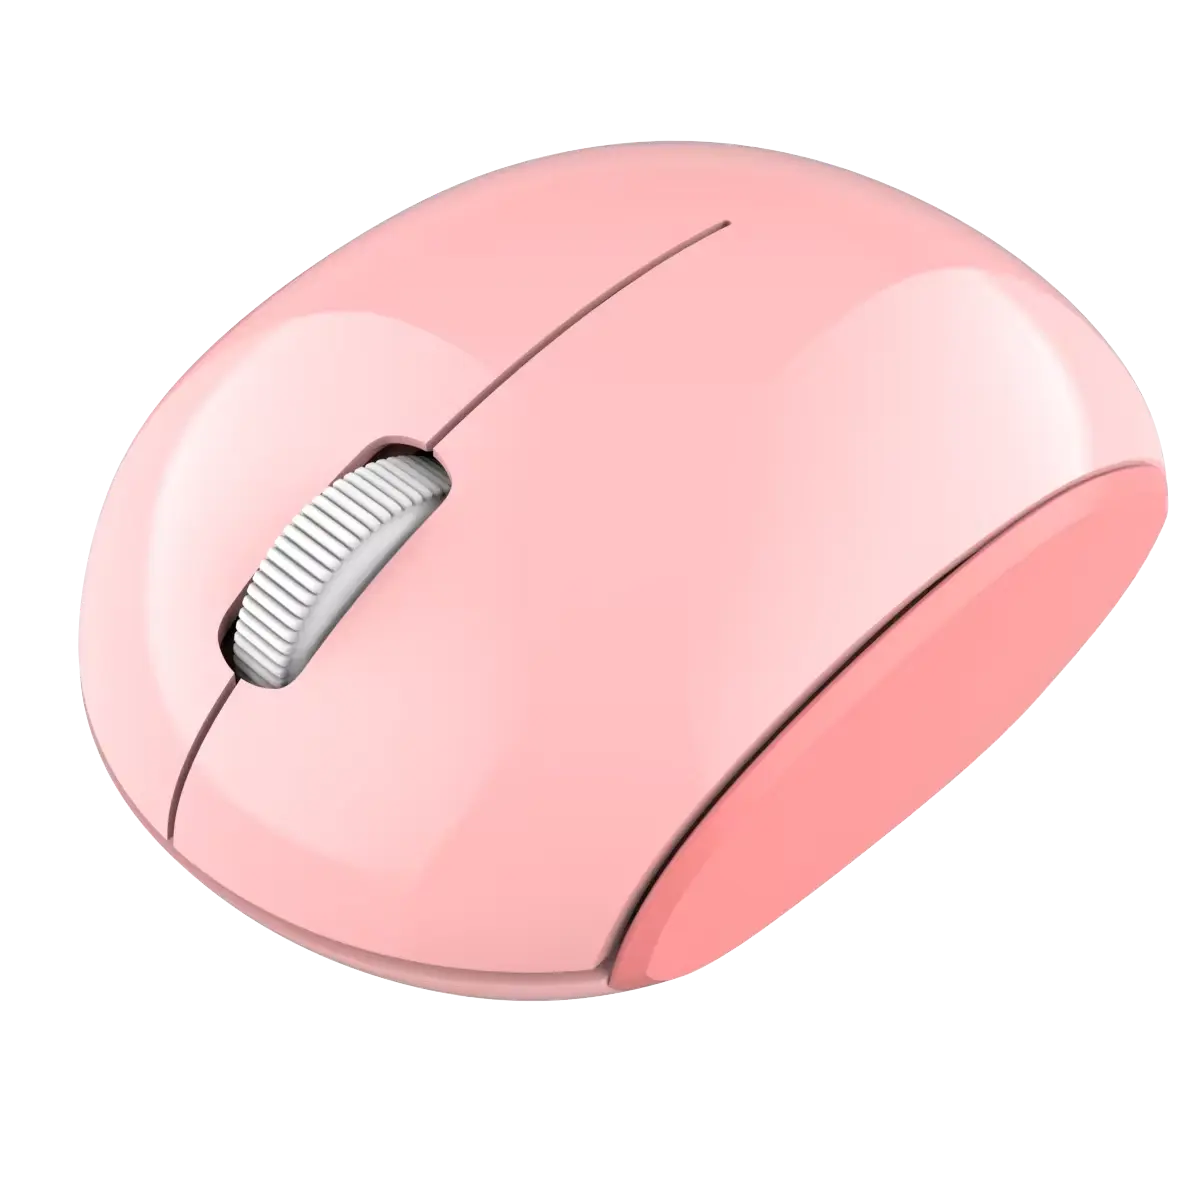 Mouse nirkabel, berbagai warna cocok untuk hadiah teman bisnis tablet laptop kantor